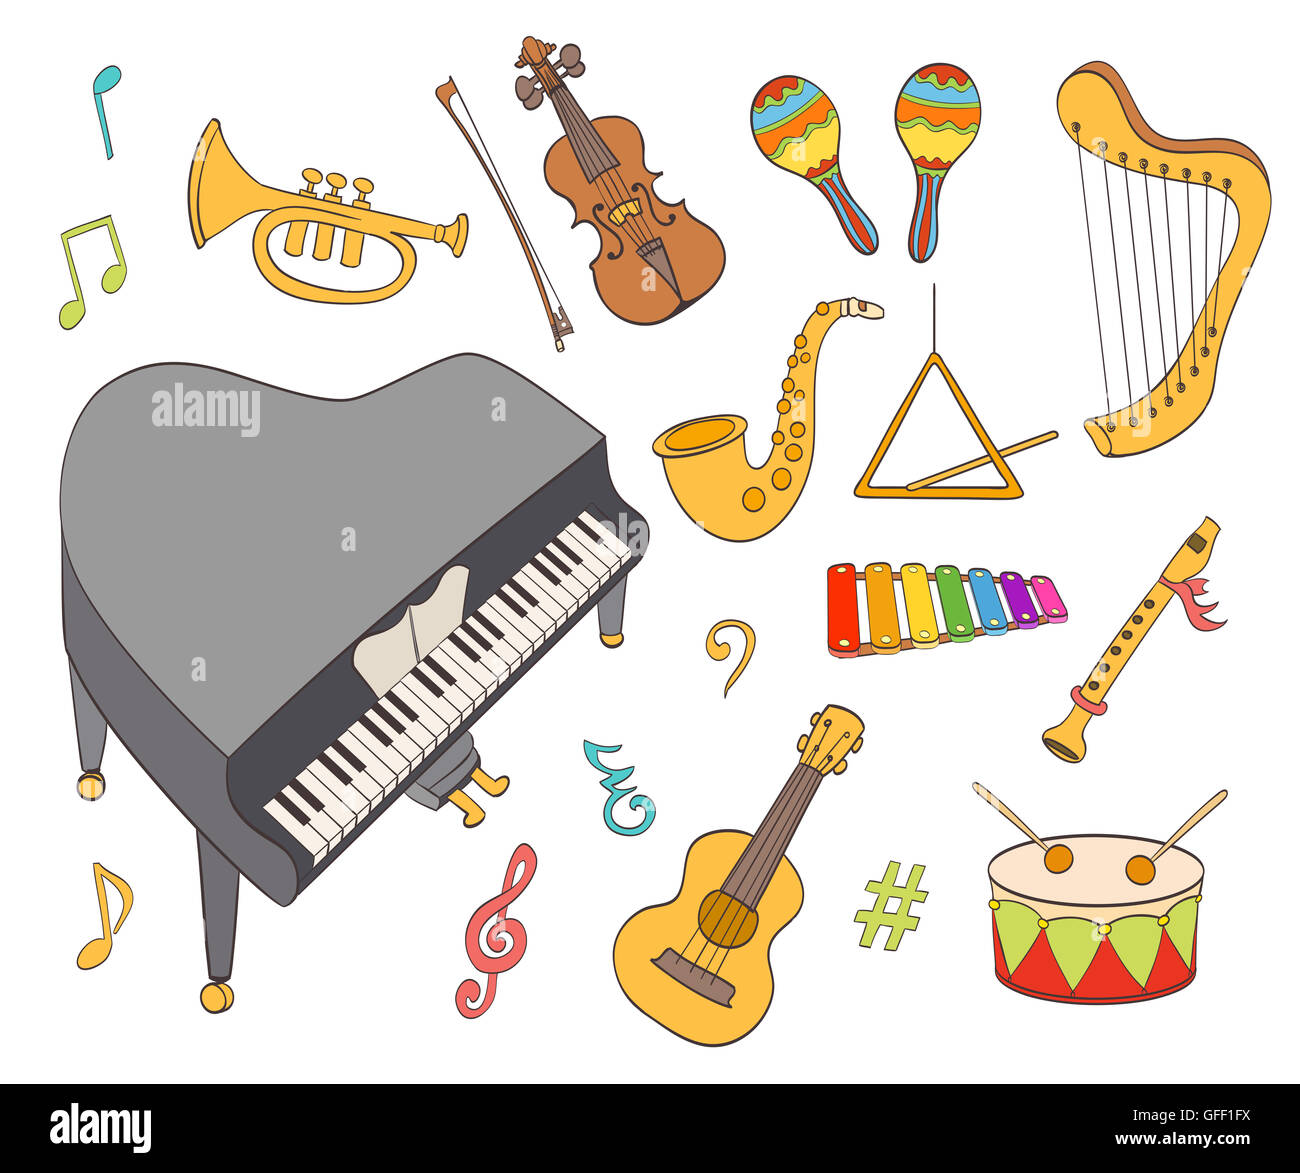 cartoon musical instruments set Stock Photo - Alamy